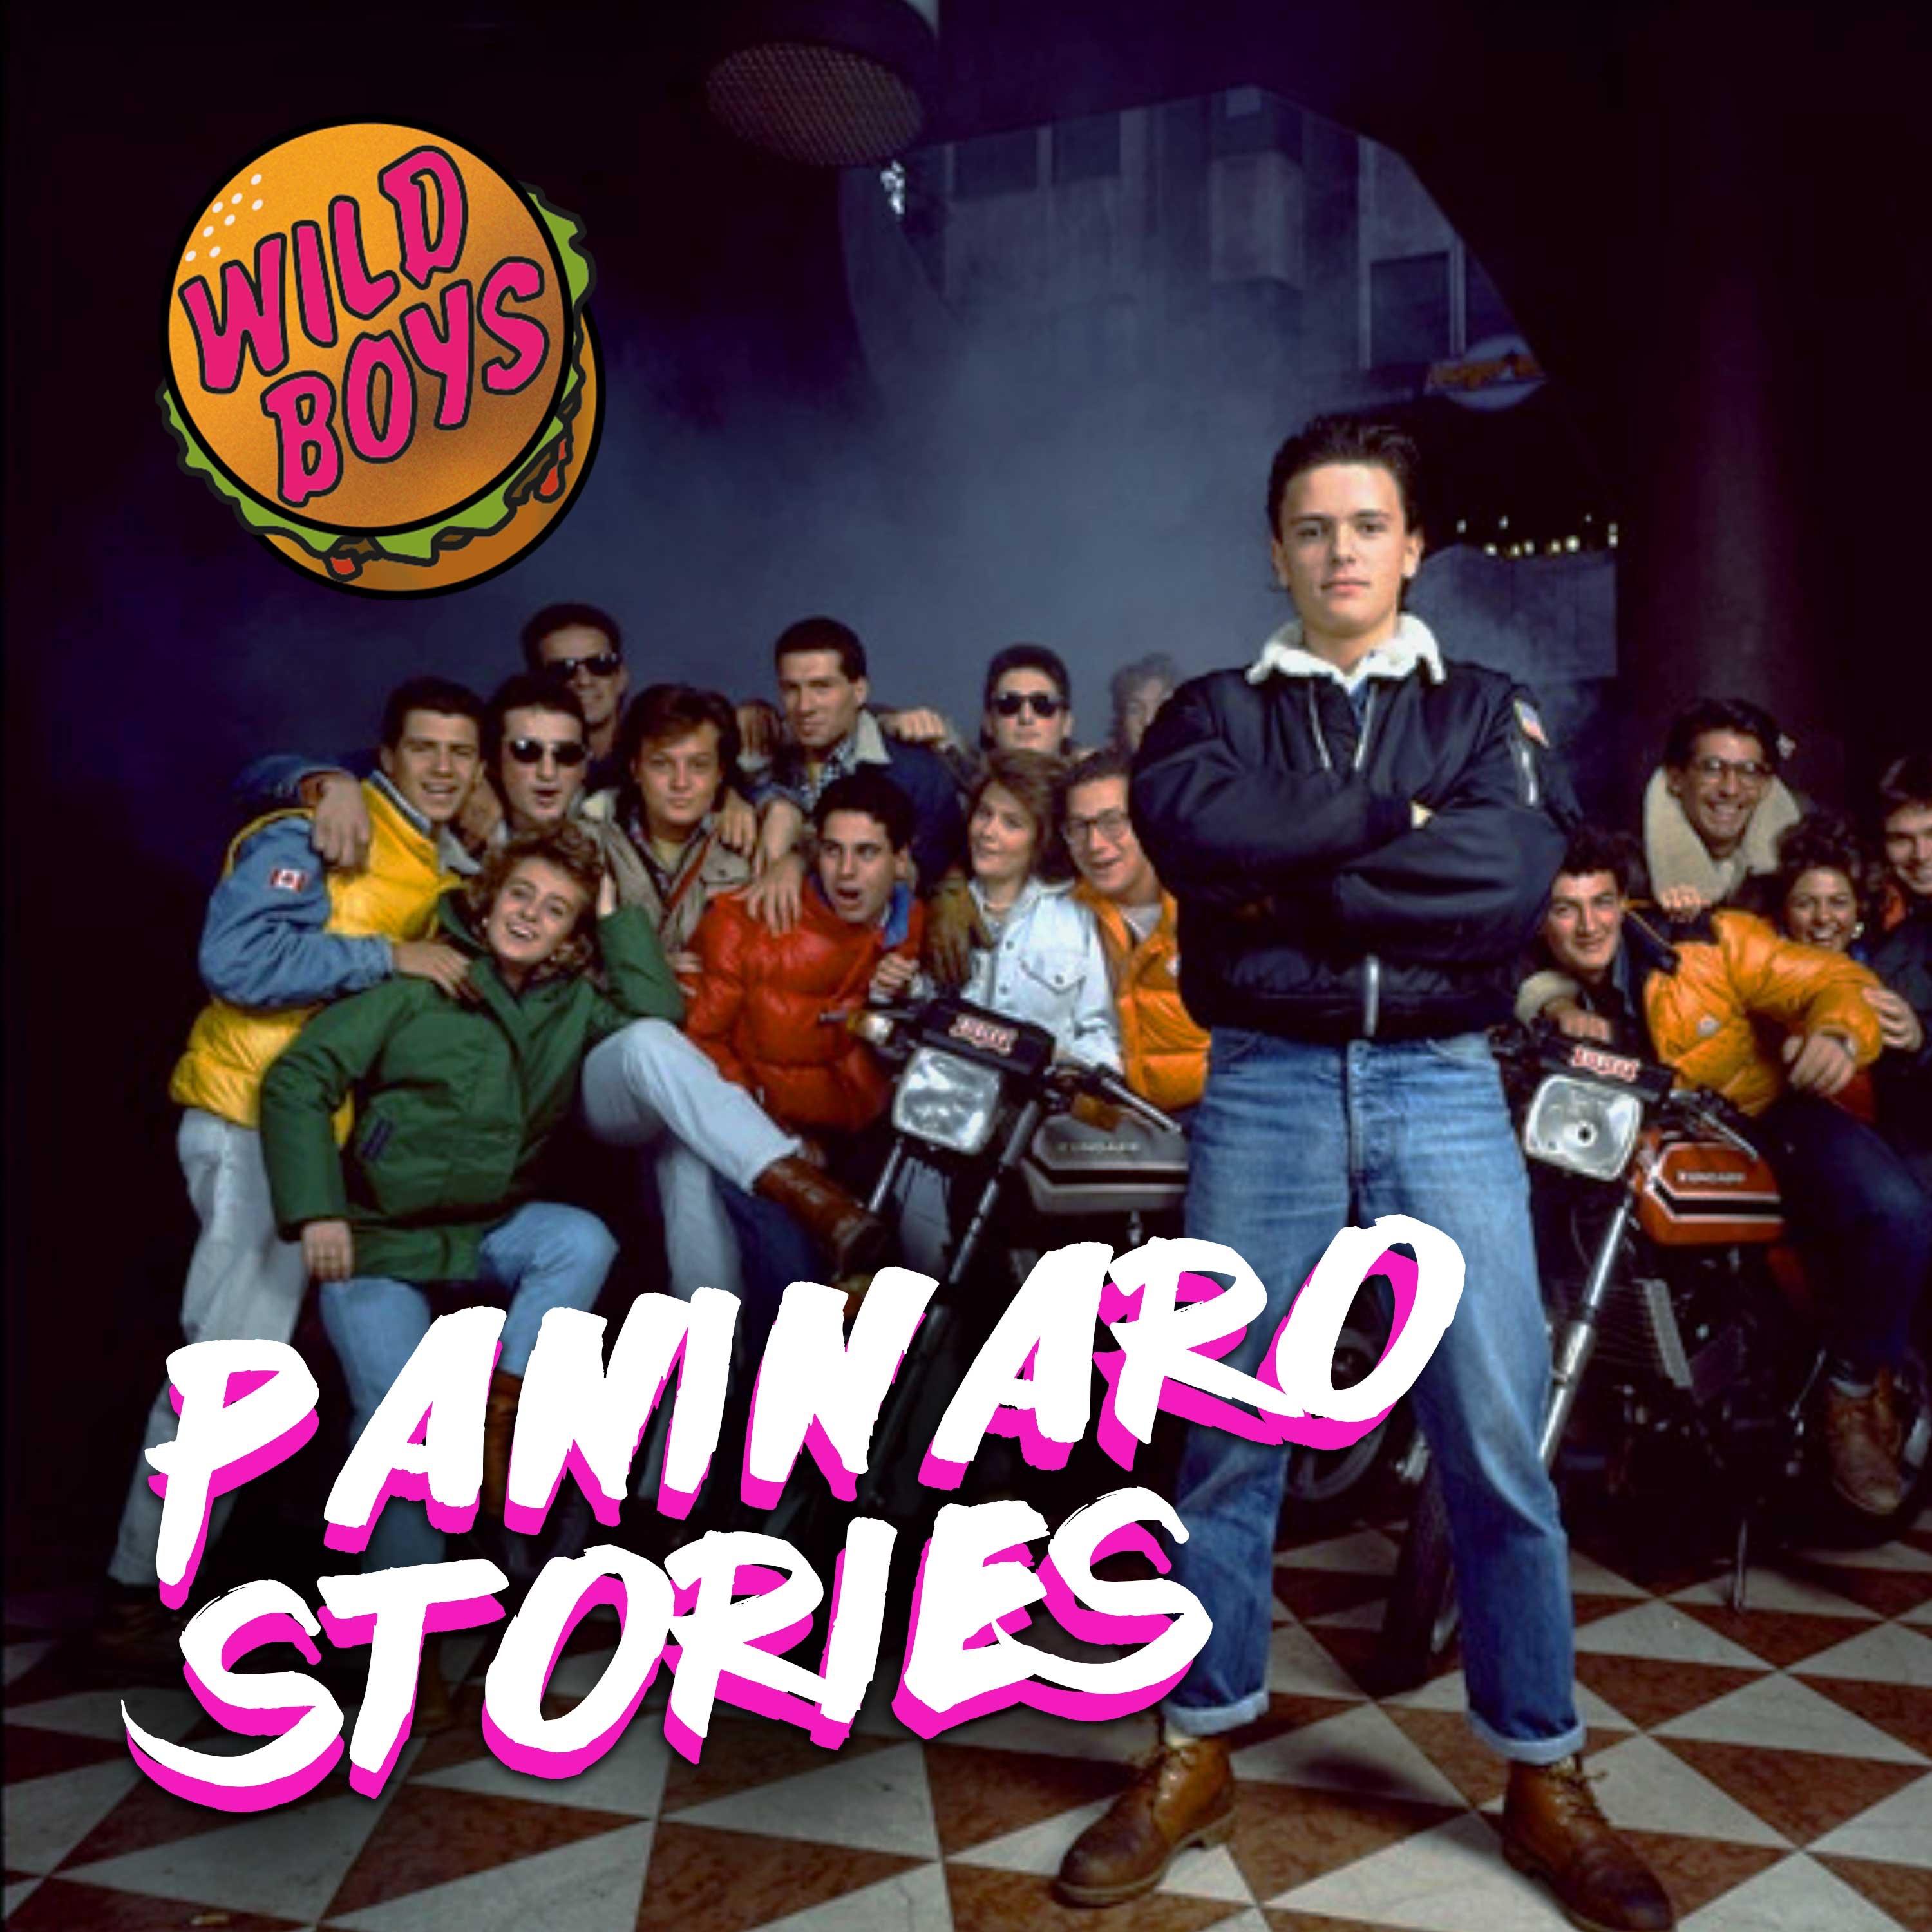 Wild Boys! The New Paninaro stories with Edy Piro & friends.